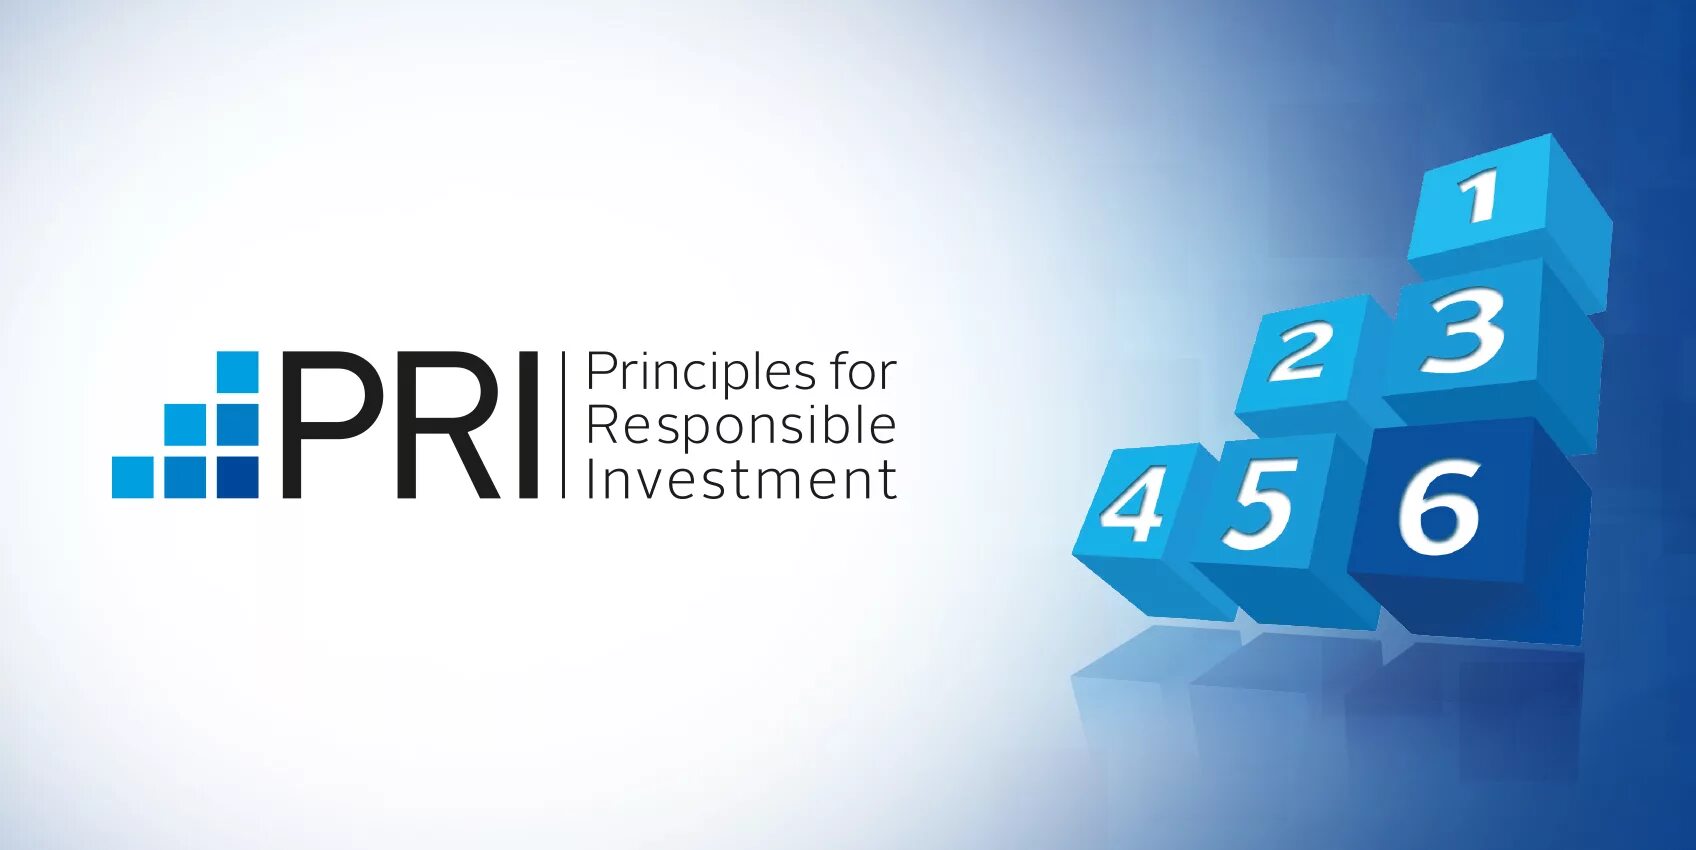 Pri. Principles for responsible investment. Principles of responsible investment. Investment principles. Principles for responsible investment 2021.